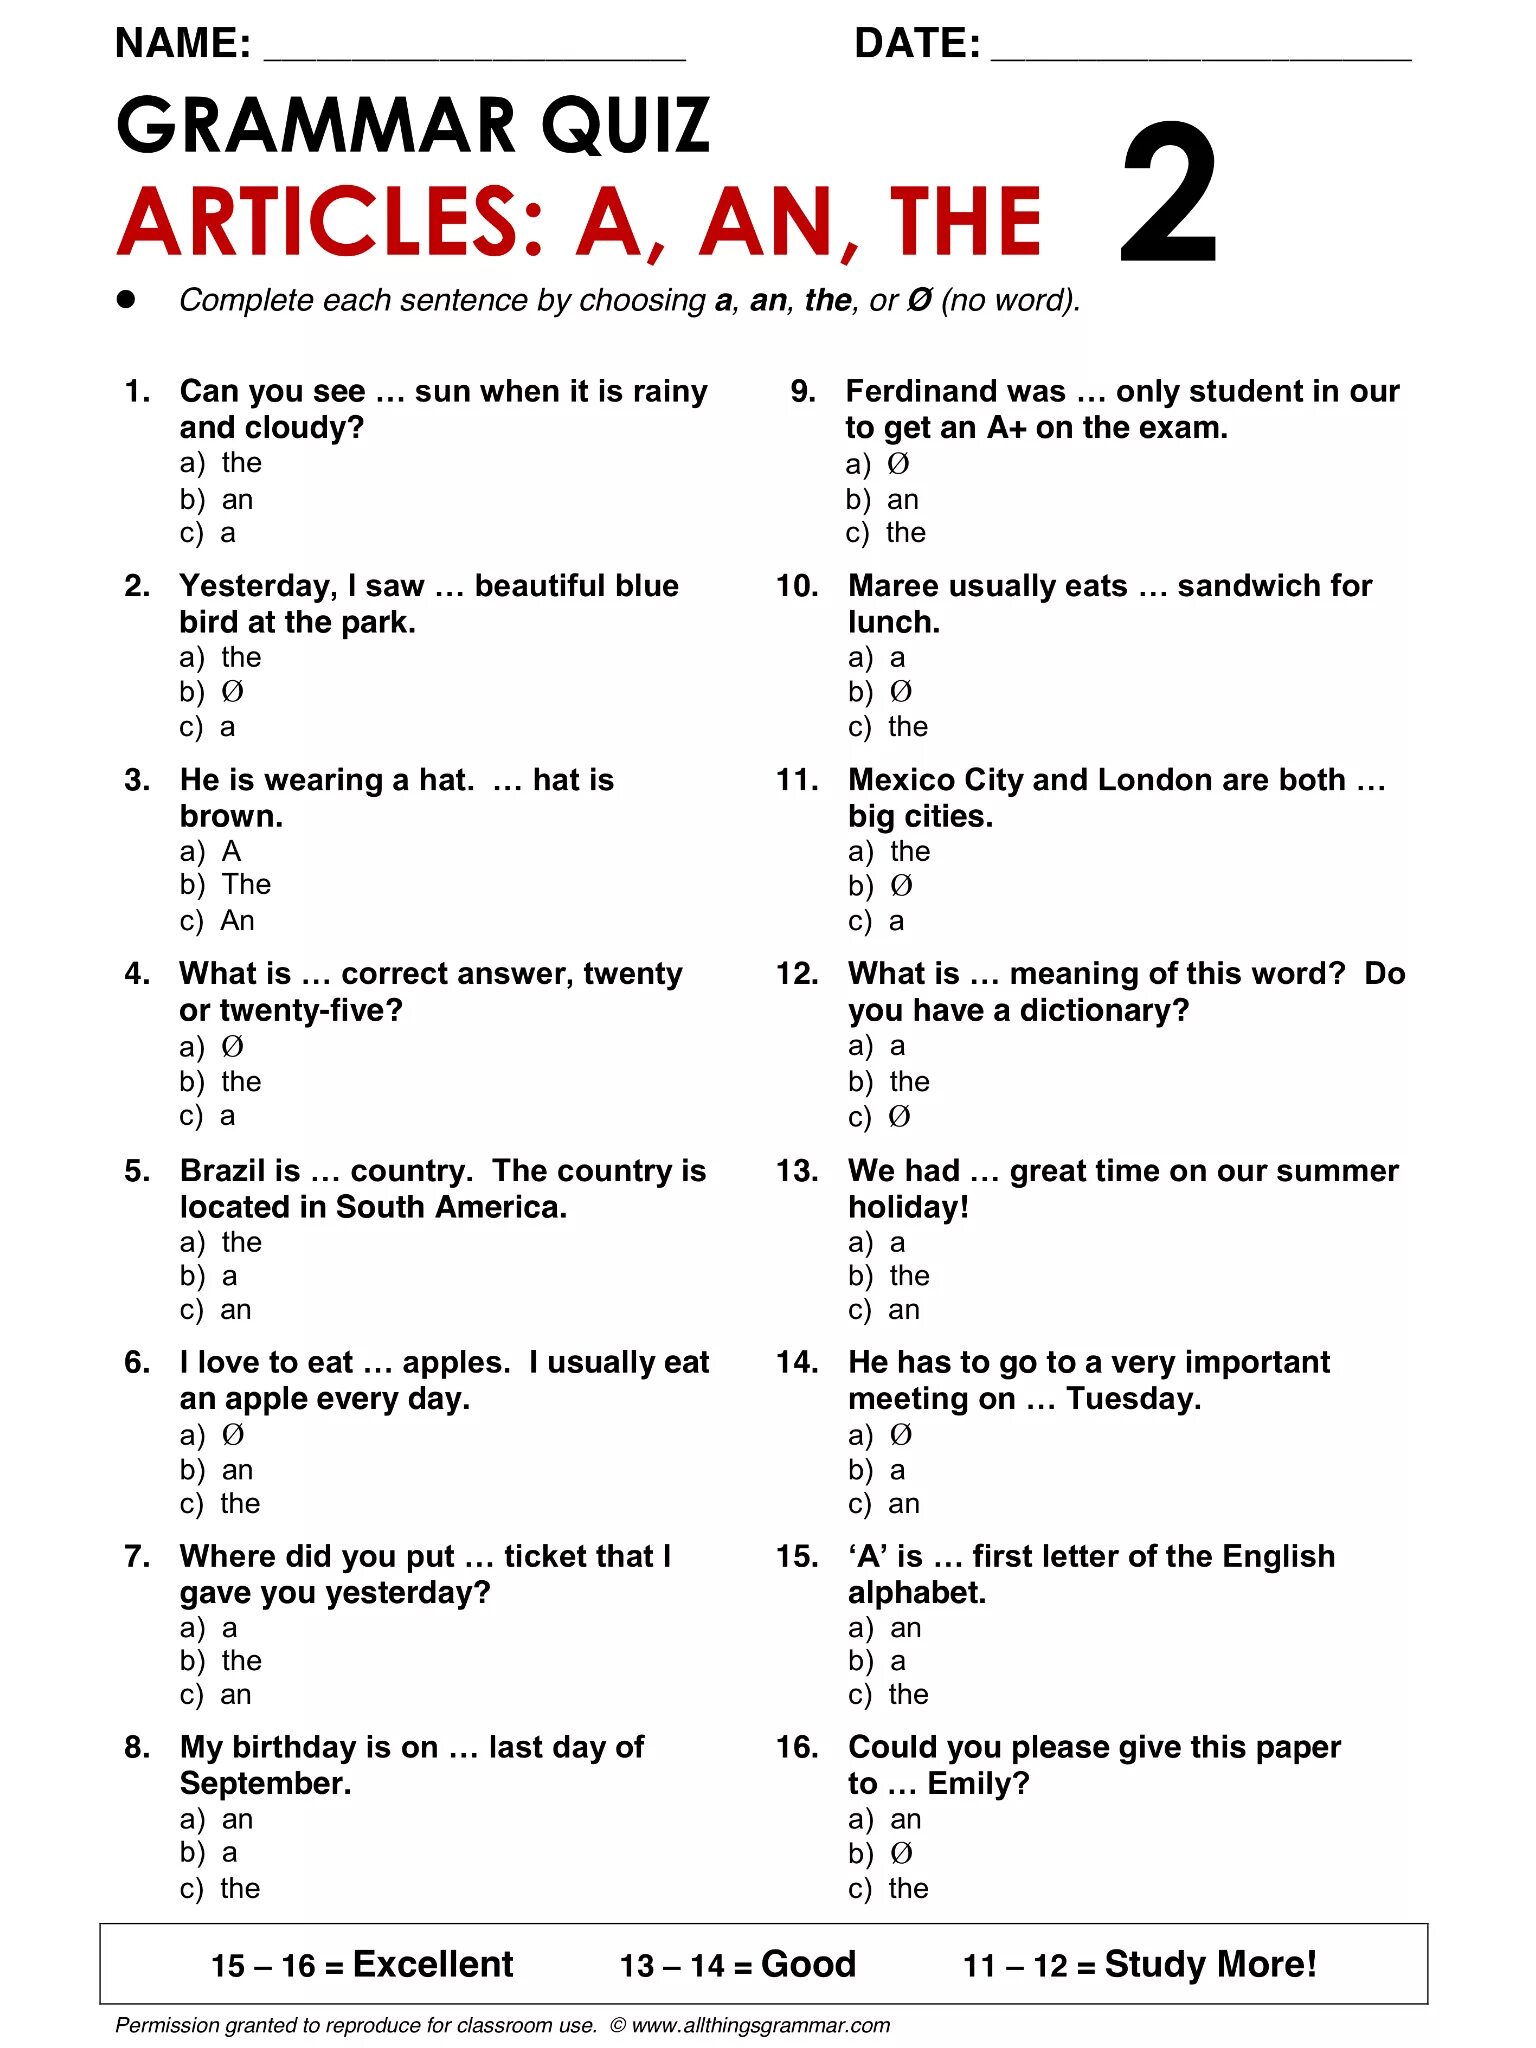 English test with answer. Тест на артикли в английском языке. Артикли в английском языке Worksheets. Артикли Worksheets. Упражнения на артикли в английском языке Worksheets.